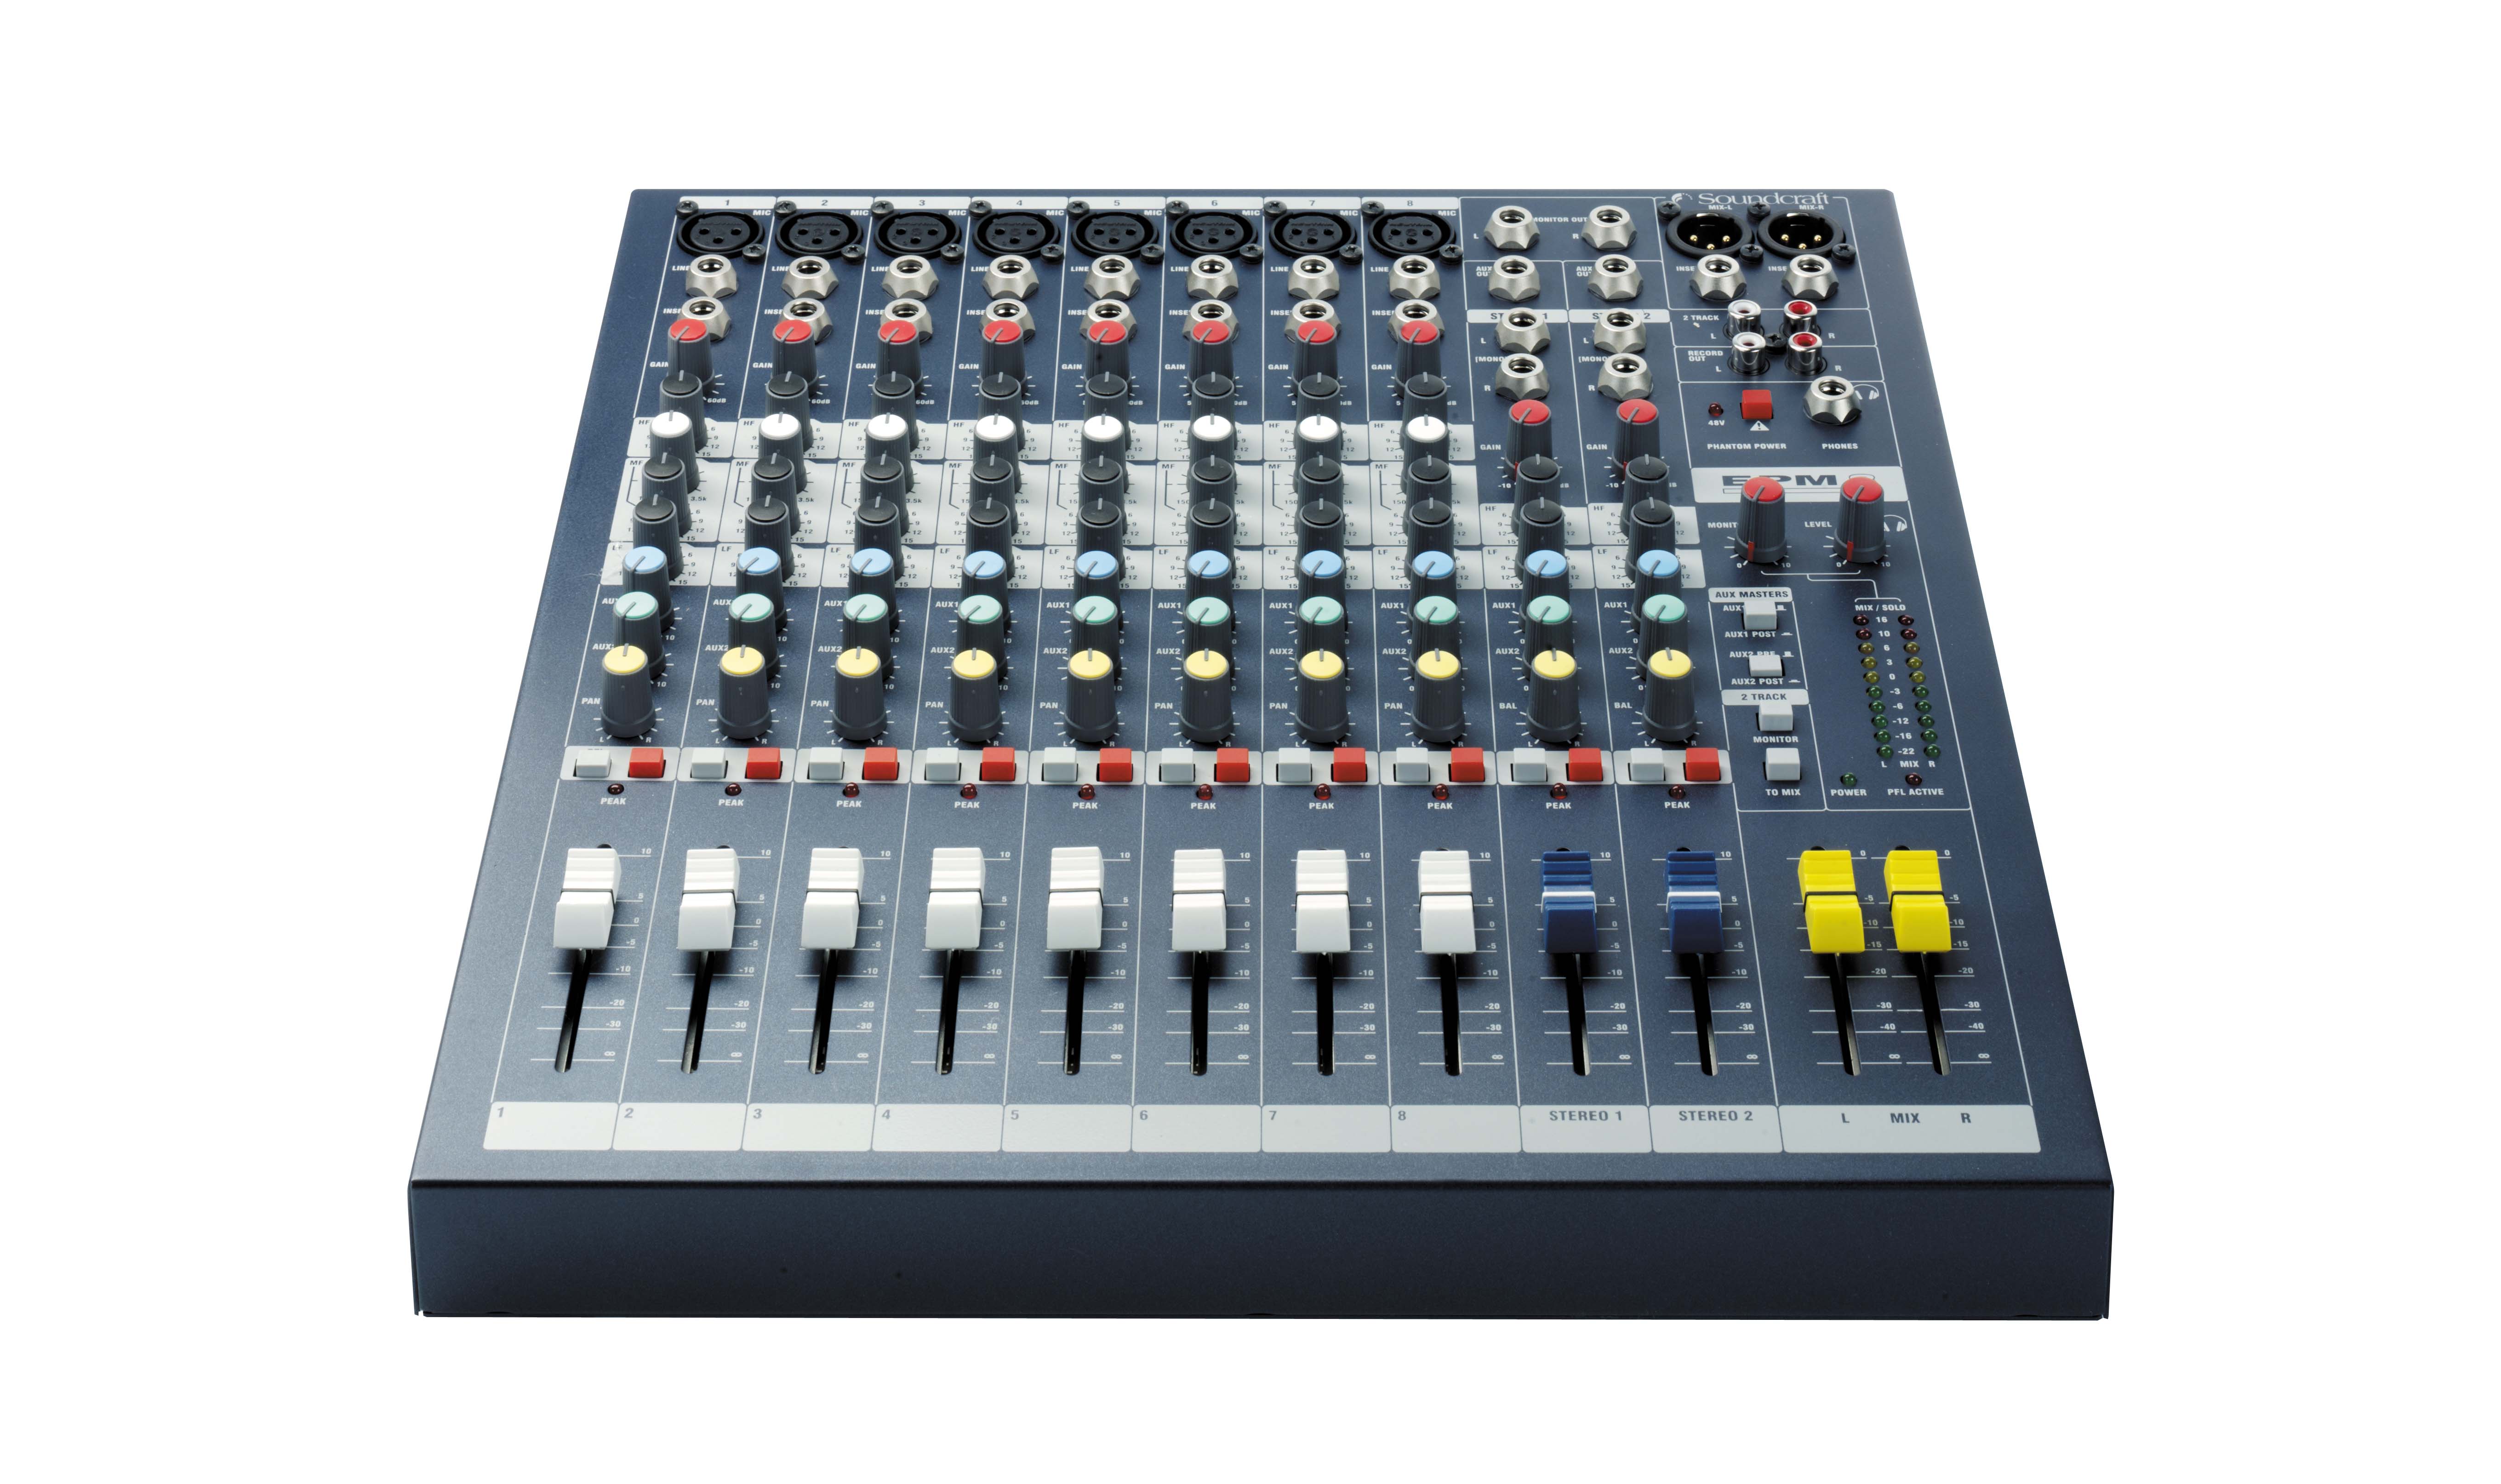 Soundcraft Epm8 - Analog mixing desk - Variation 2